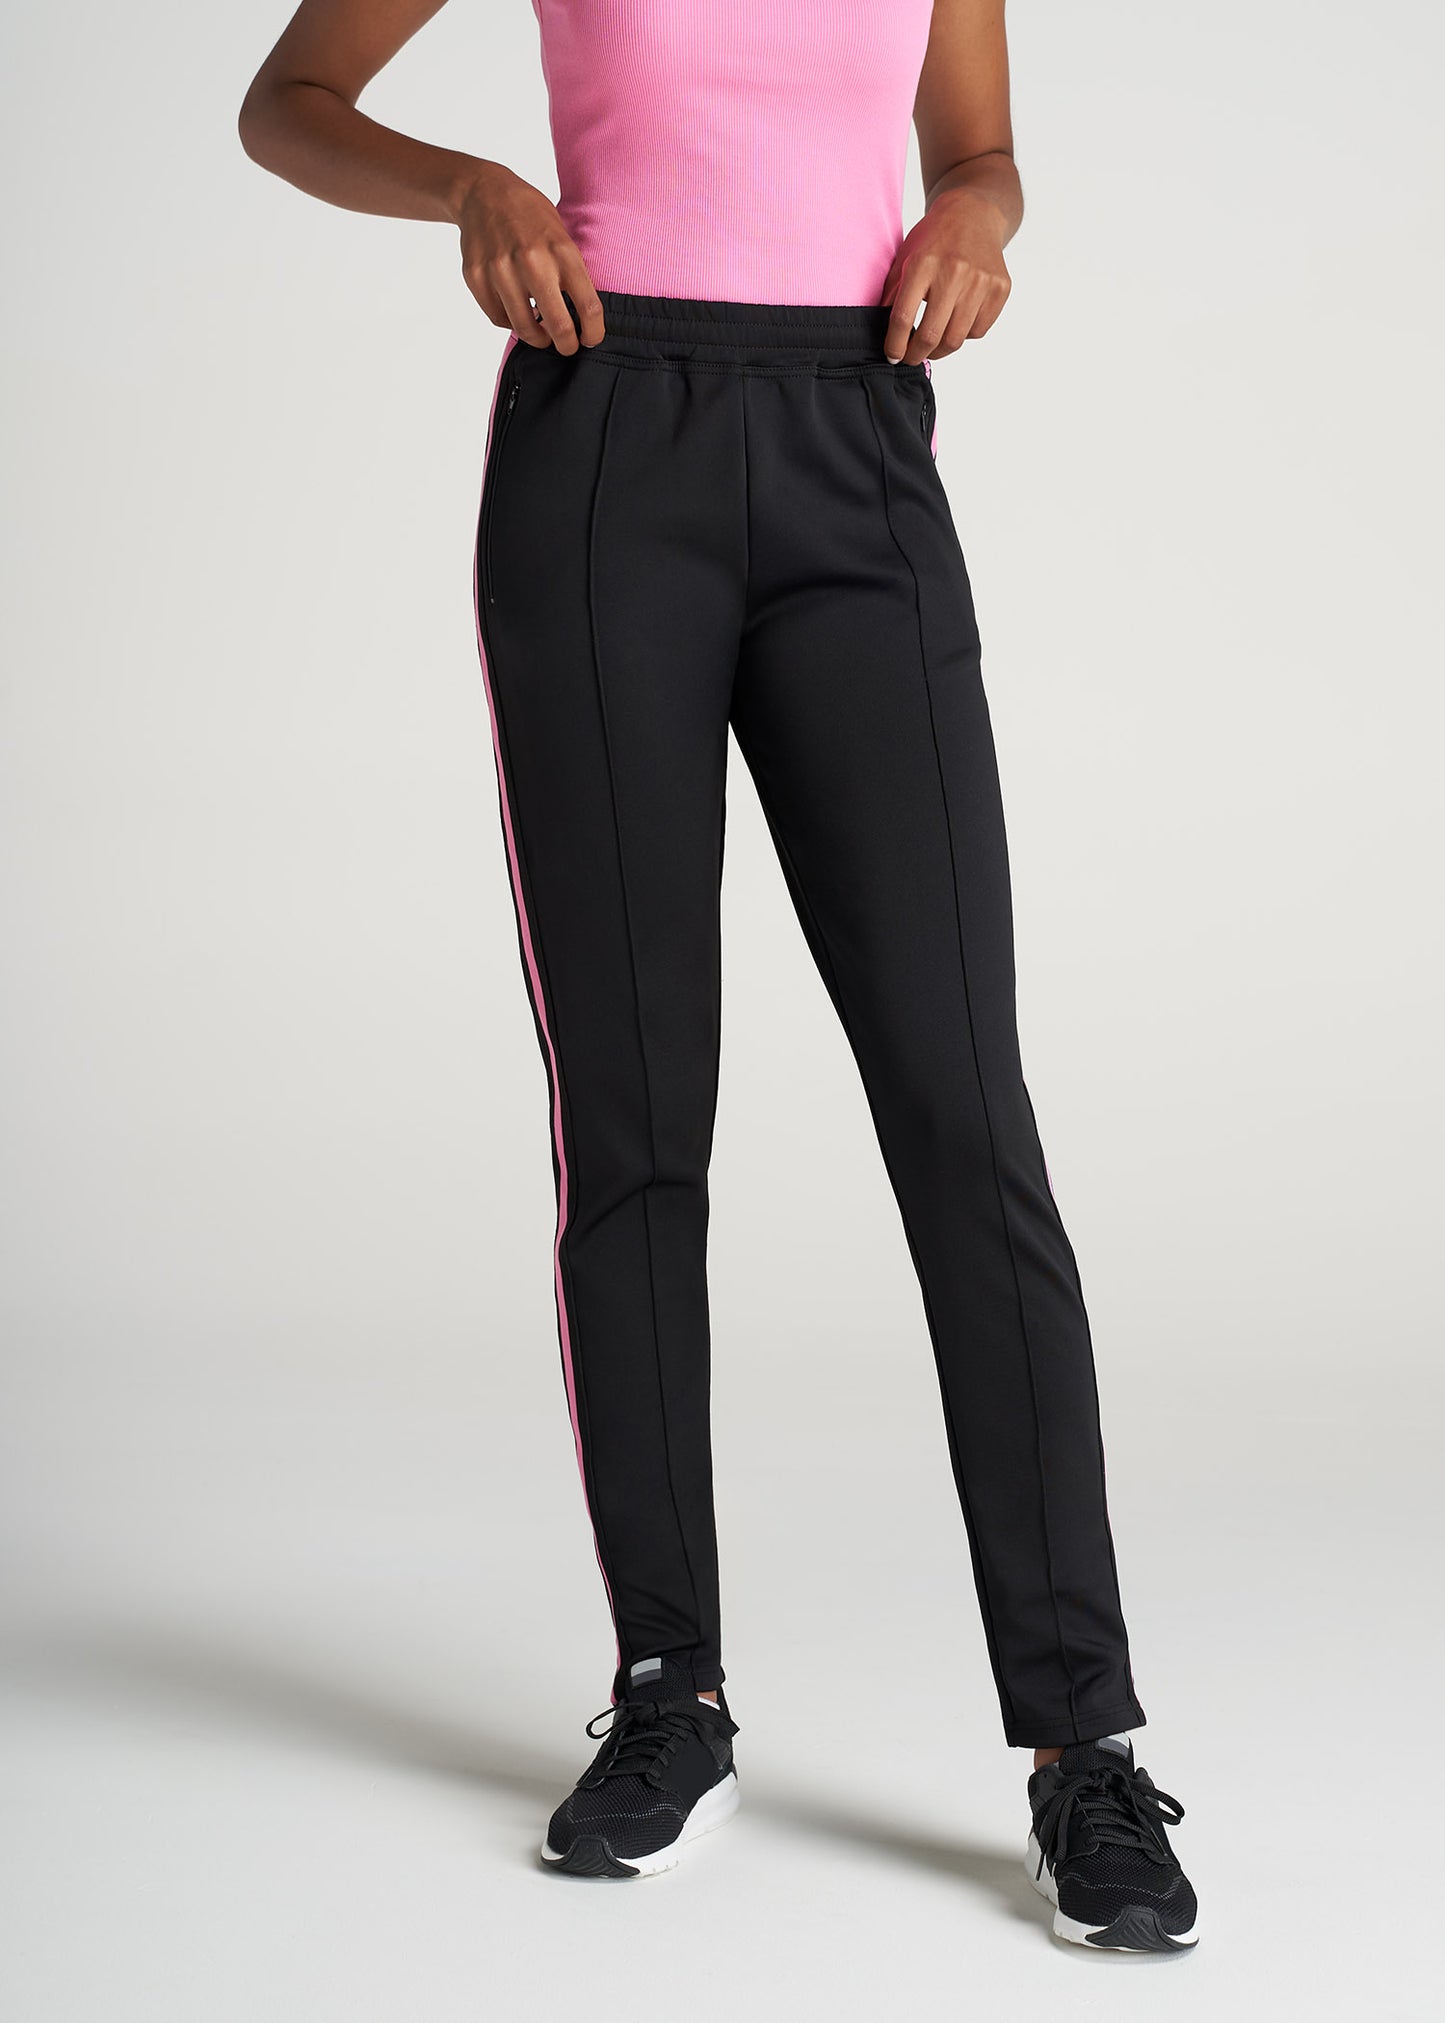 PINK Side Stripe Track Pants for Women